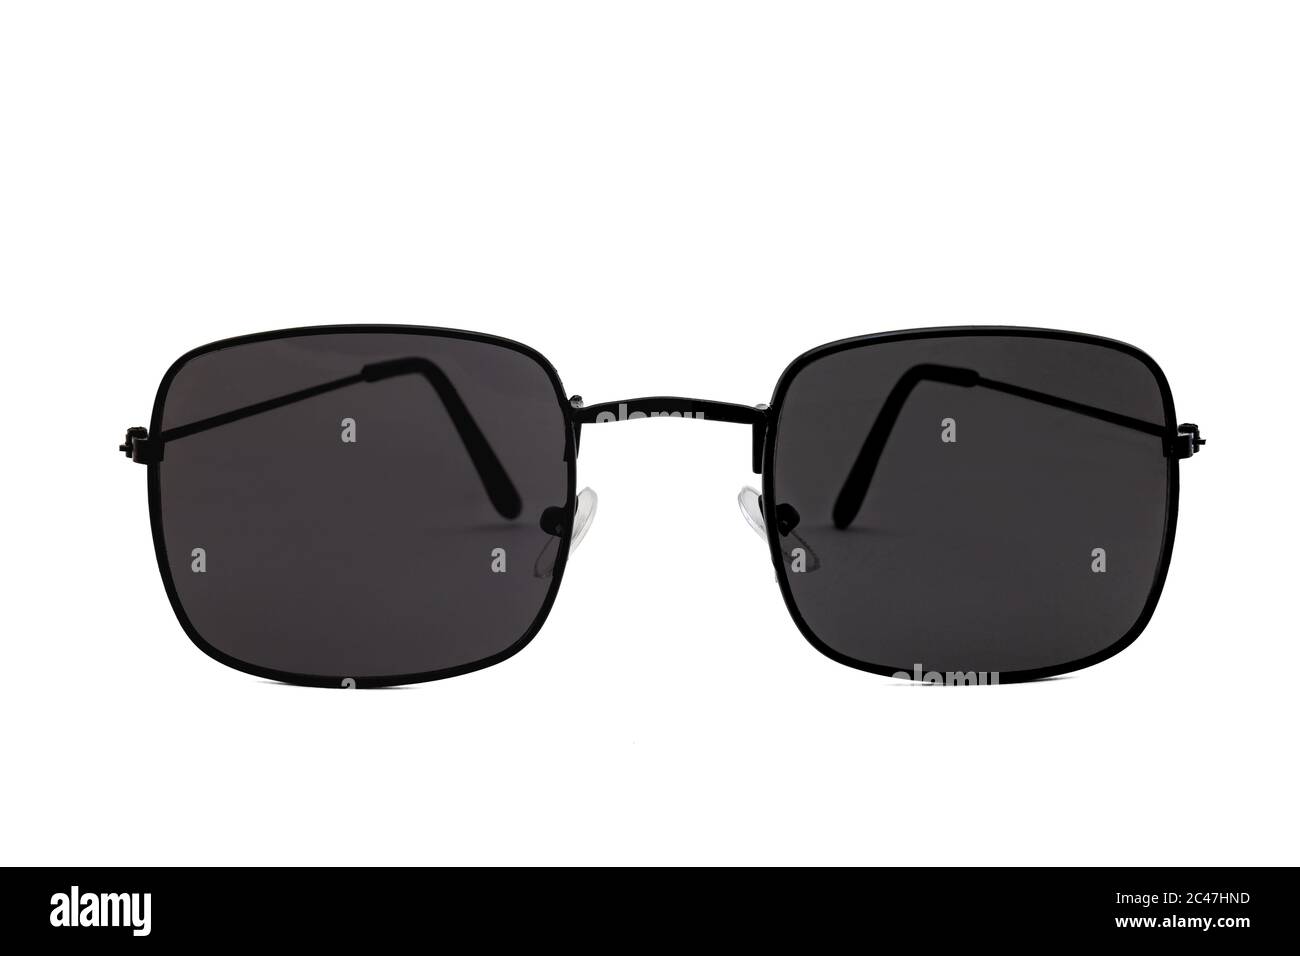 Gafas de sol rectangulares negras con lentes de fondo redondo mate y marcos  negros finos aislados sobre fondo blanco. Vista lateral Fotografía de stock  - Alamy